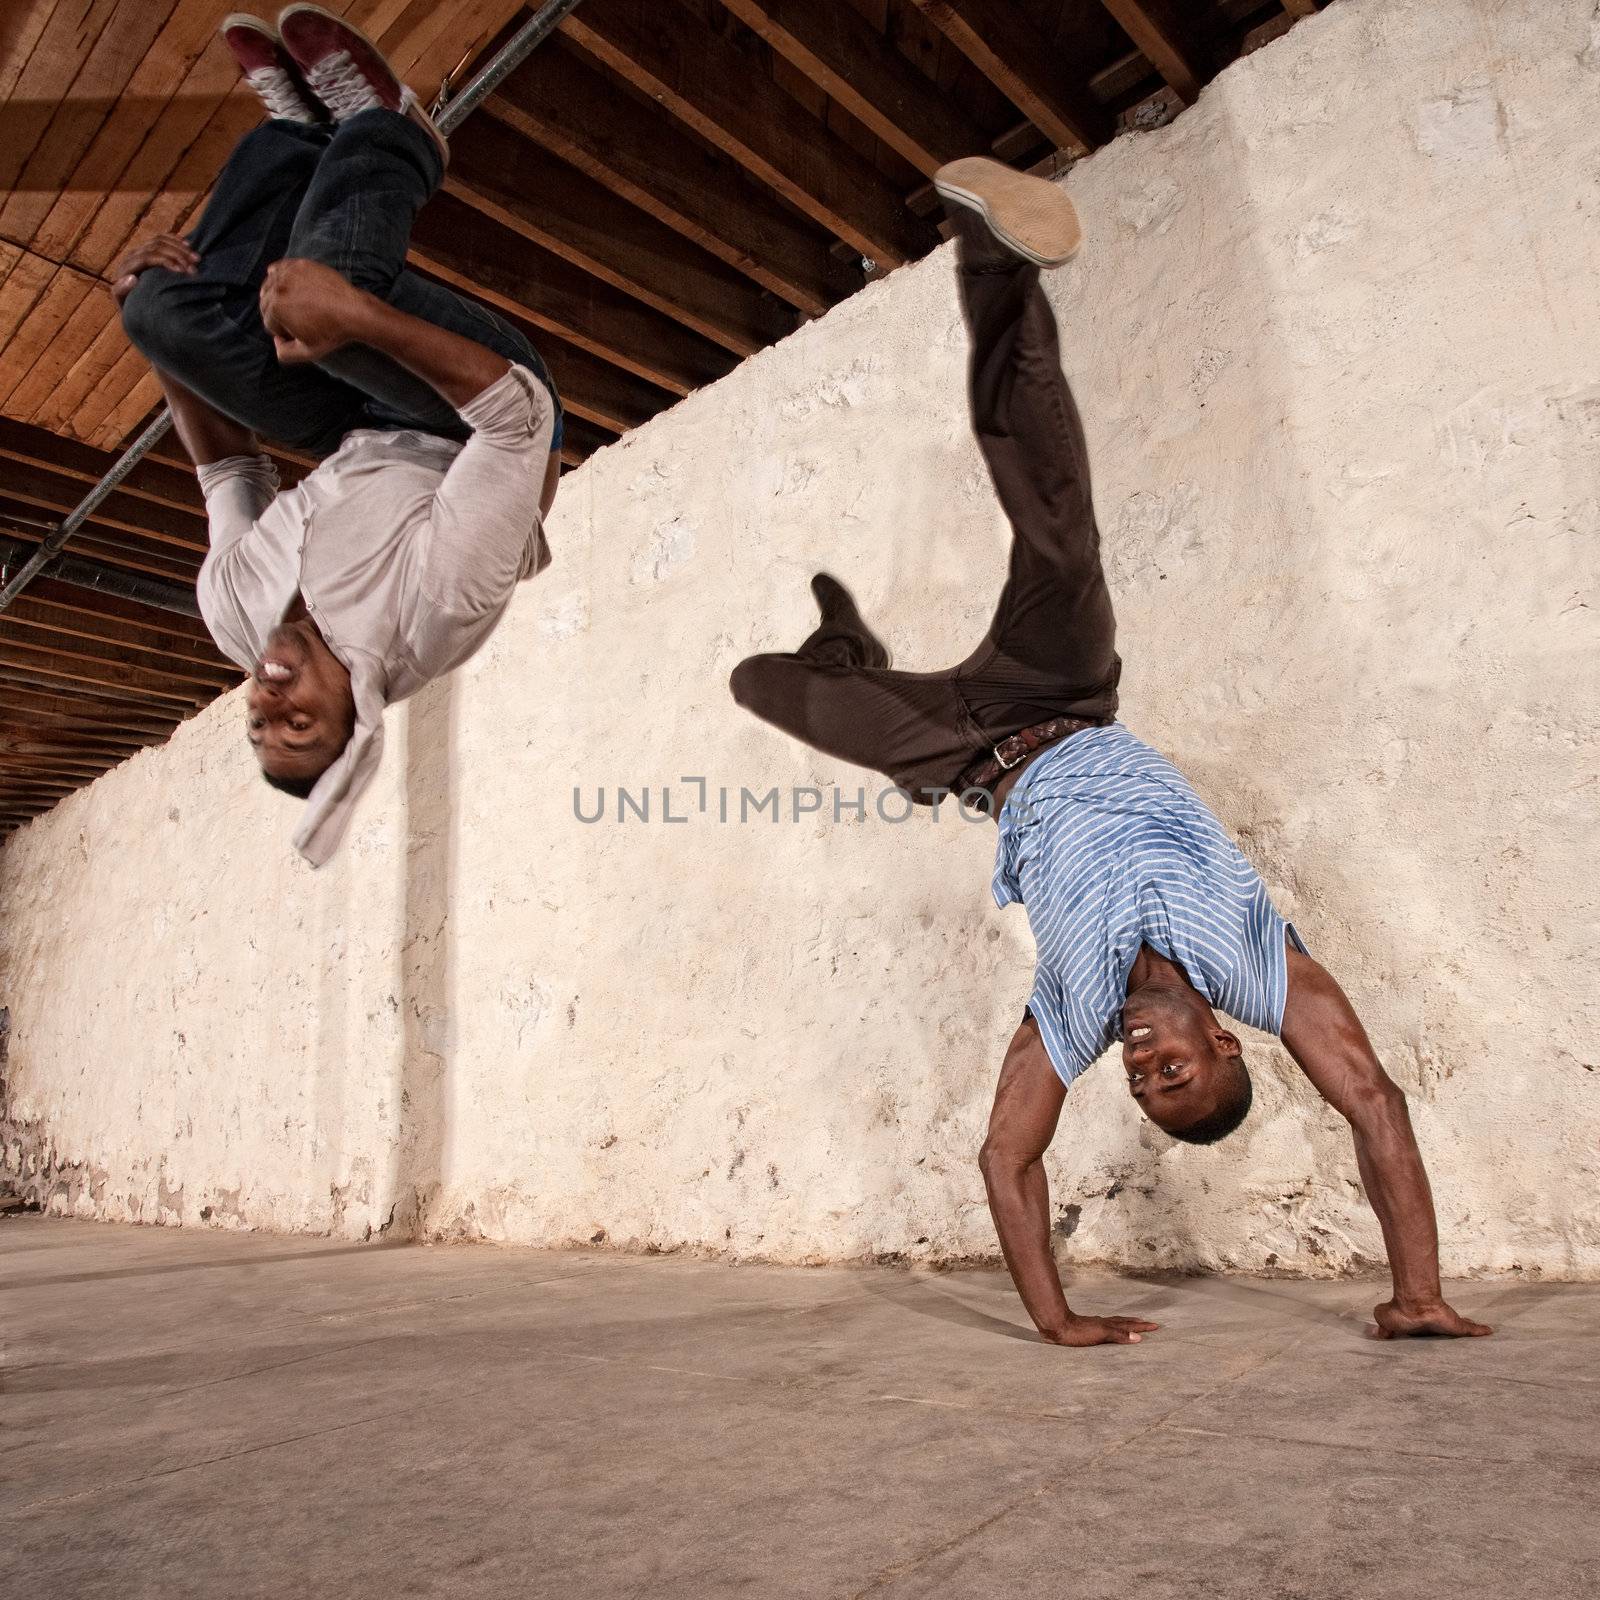 Agile capoeria martial artists perform acrobatic techniques